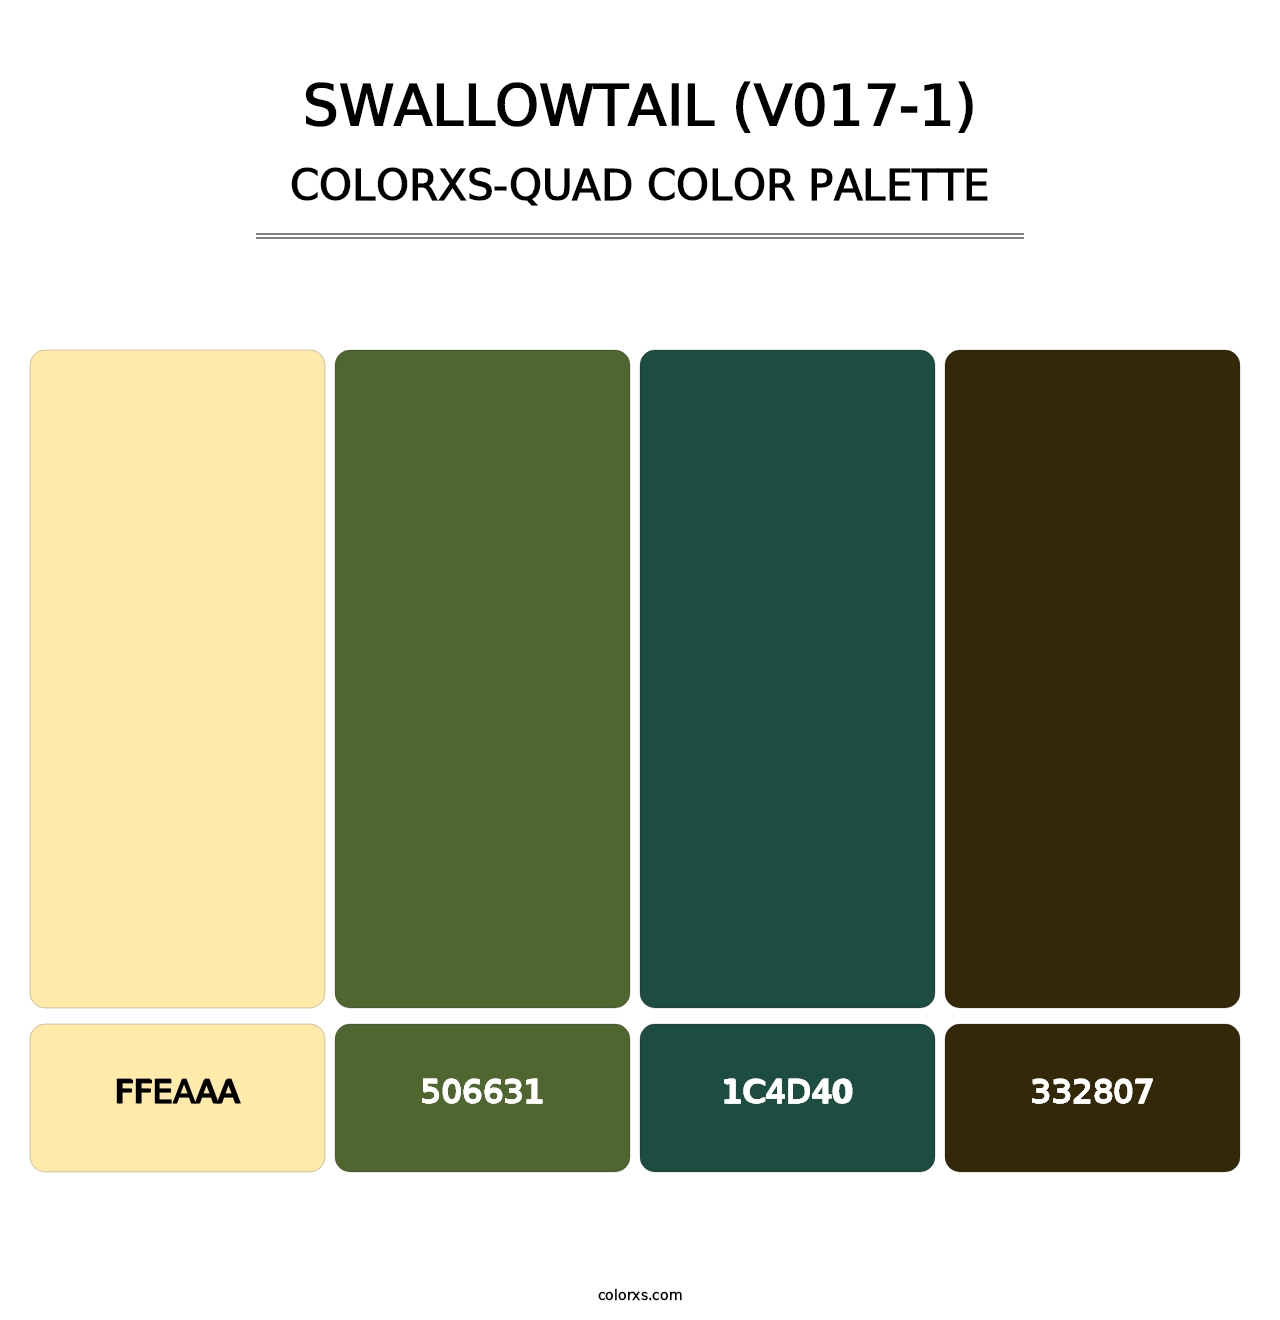 Swallowtail (V017-1) - Colorxs Quad Palette